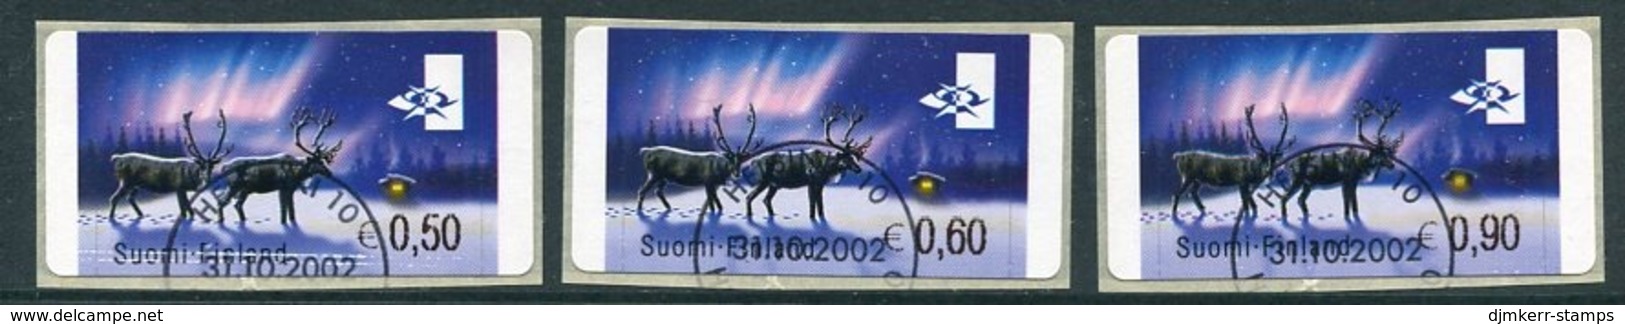 FINLAND 2002 Reindeer ATM, Three Values Used.  Michel 37 - Automatenmarken [ATM]